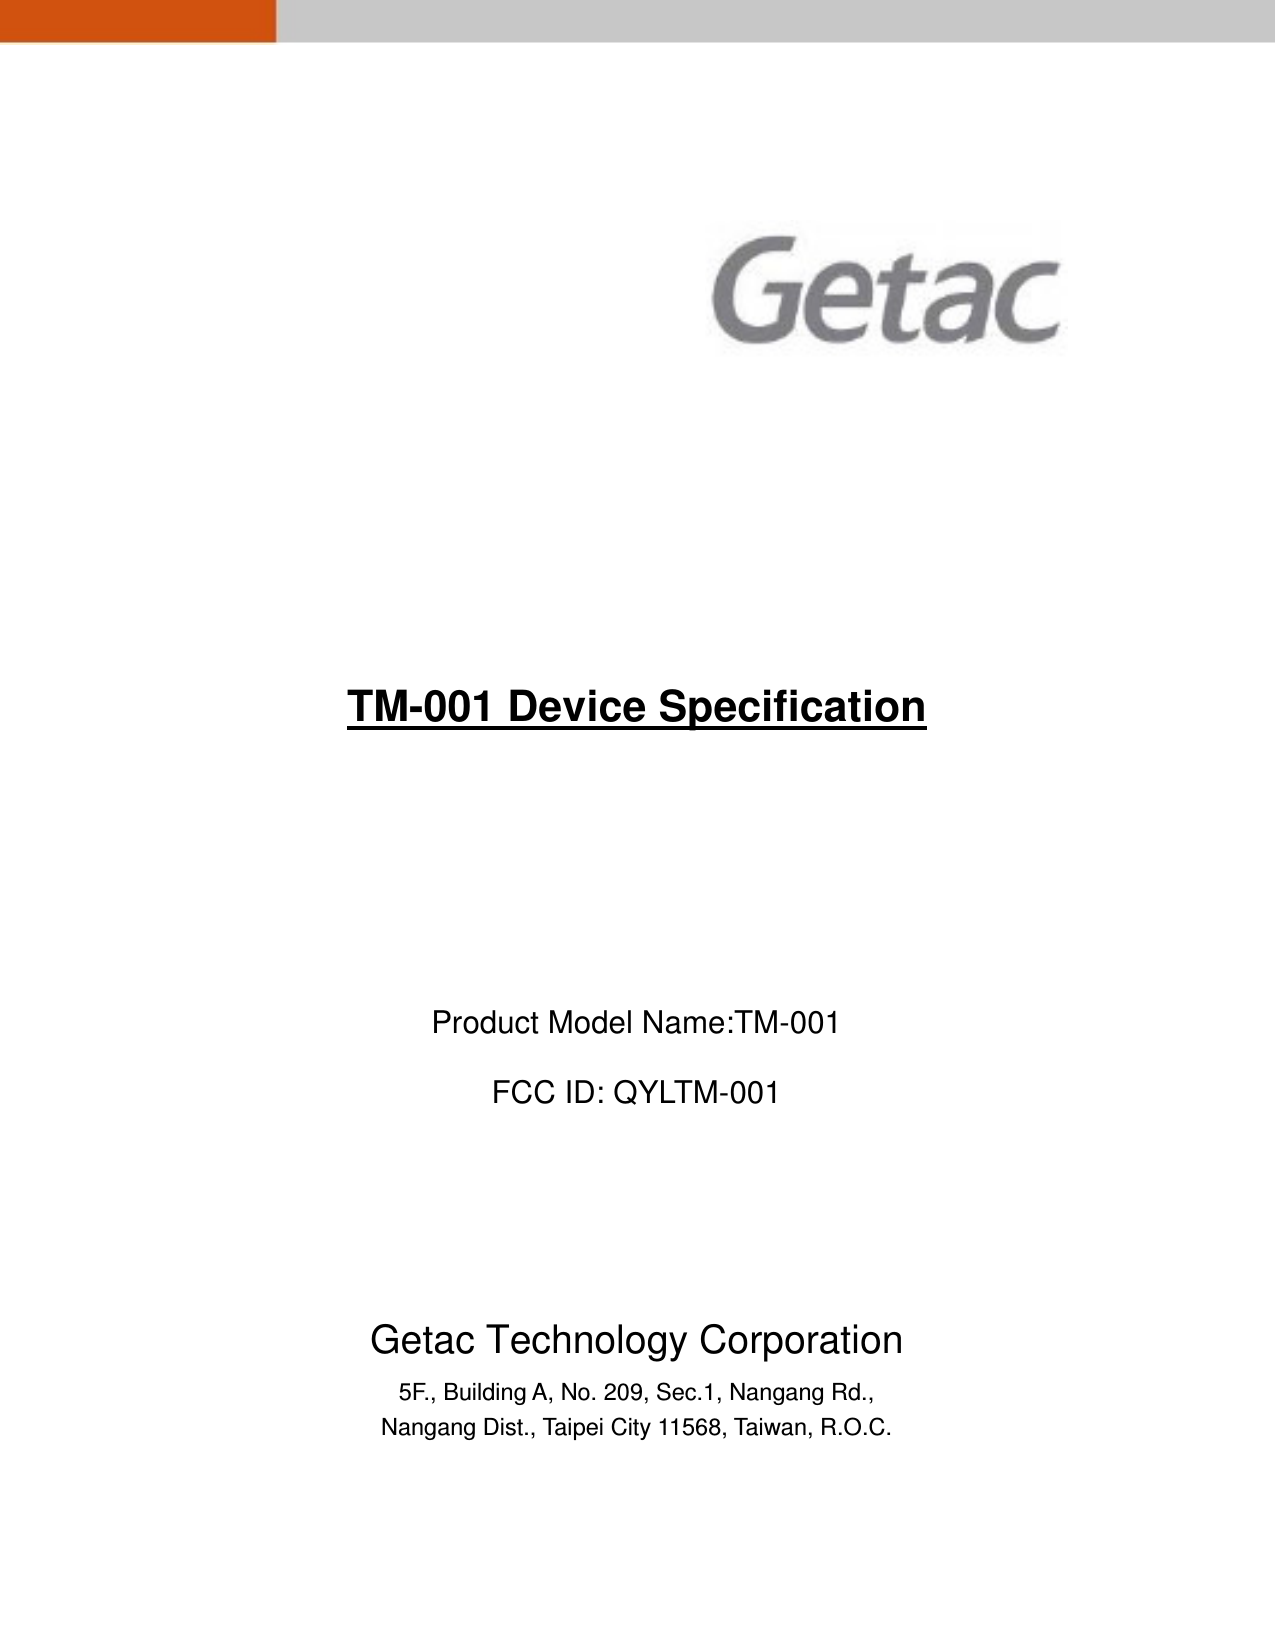                     TM-001 Device Specification       Product Model Name:TM-001 FCC ID: QYLTM-001      Getac Technology Corporation 5F., Building A, No. 209, Sec.1, Nangang Rd., Nangang Dist., Taipei City 11568, Taiwan, R.O.C.  